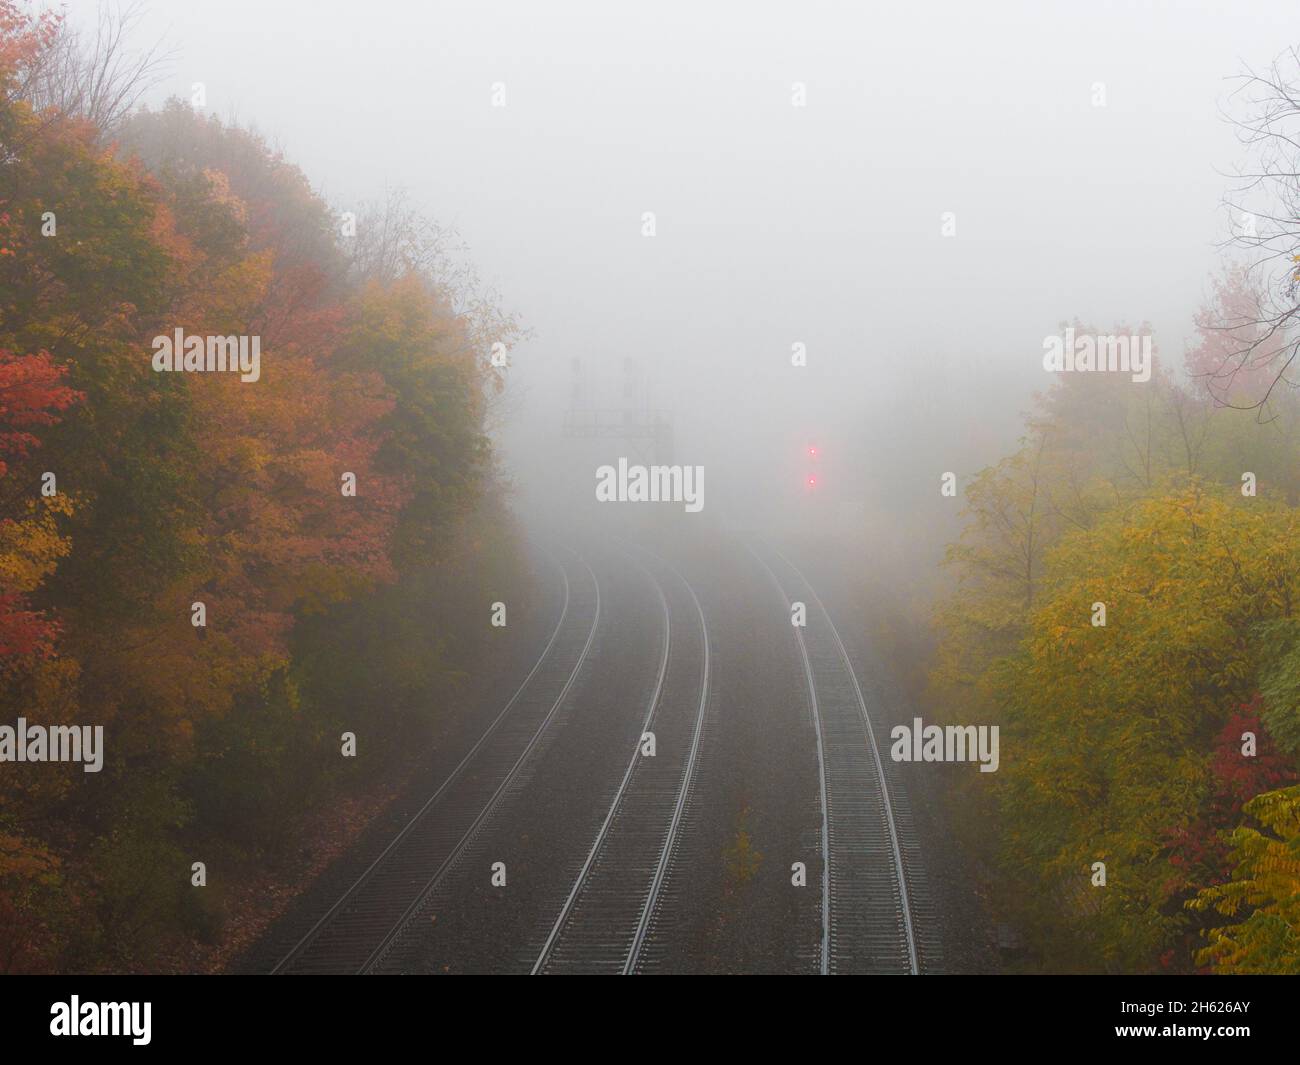 autumn season in canada,ontario,morning fog,rail lines,3 railway tracks,signal lights,the unknown Stock Photo